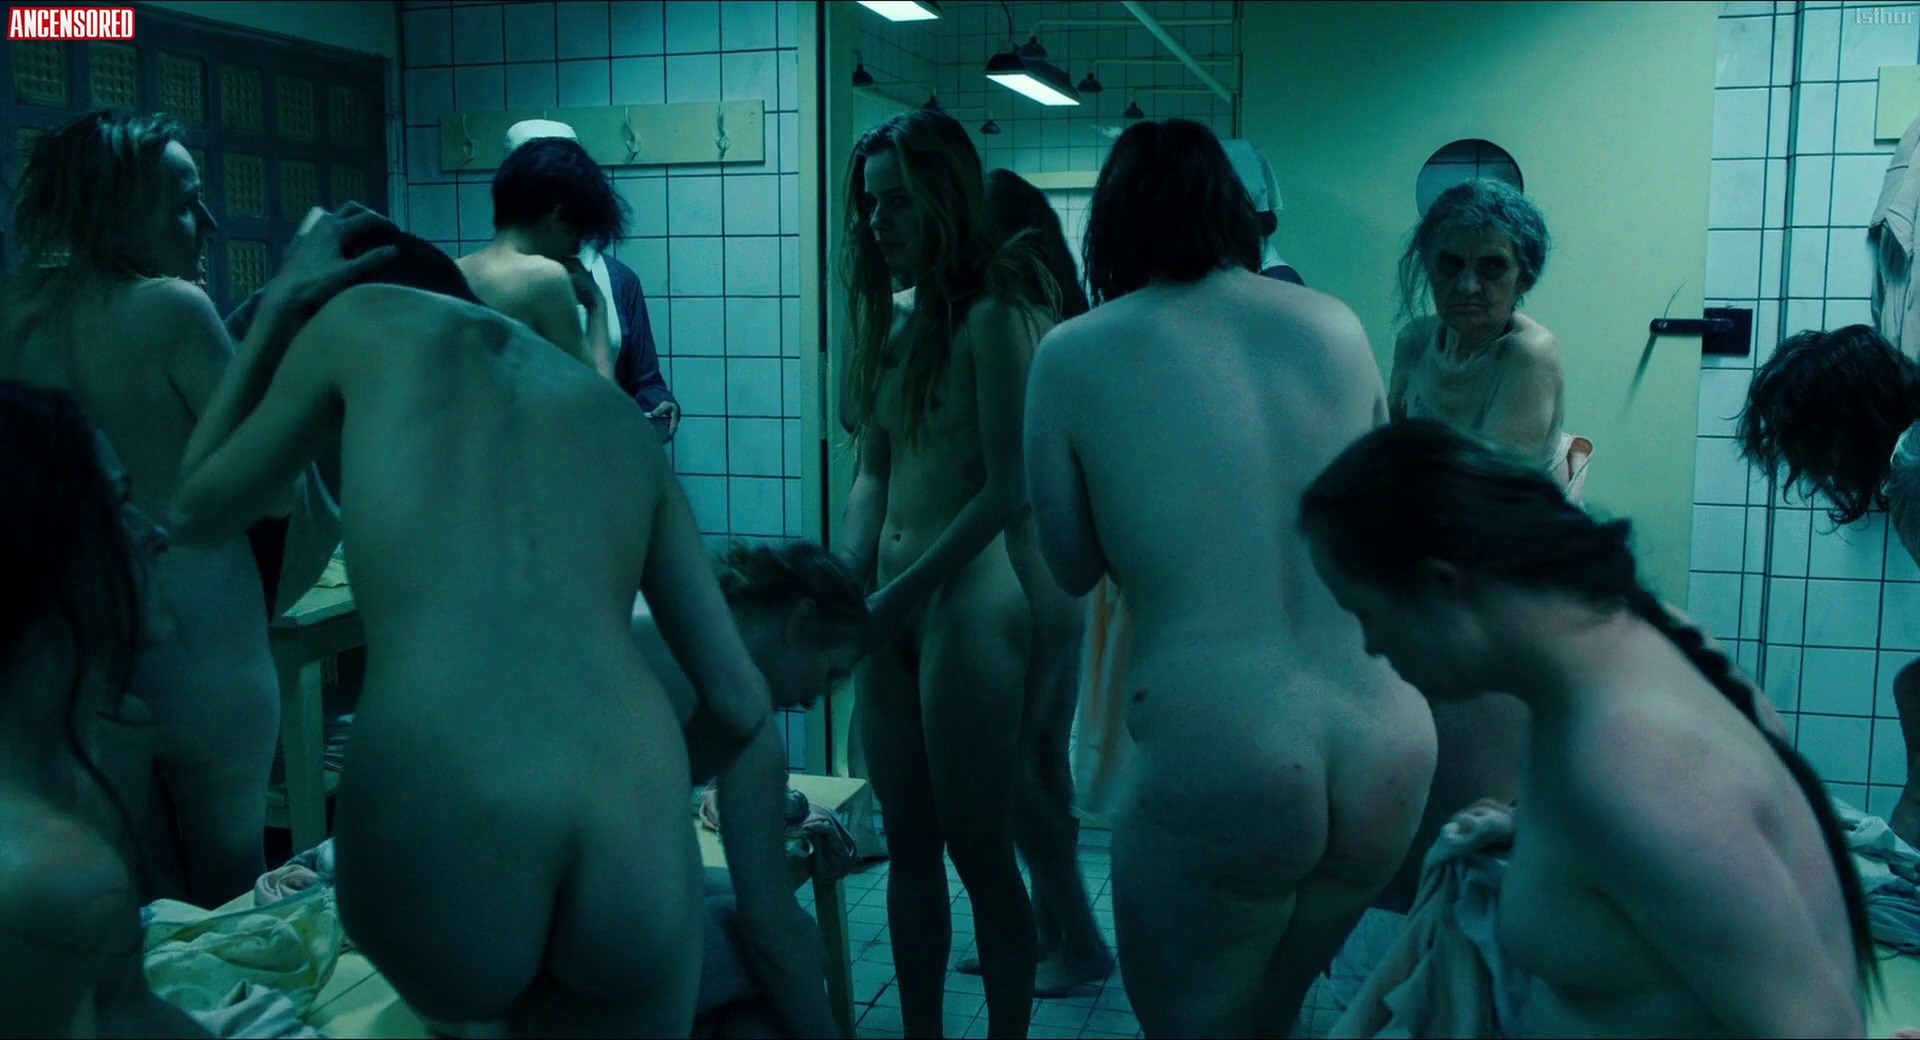 Саския Розендаль nude pics.